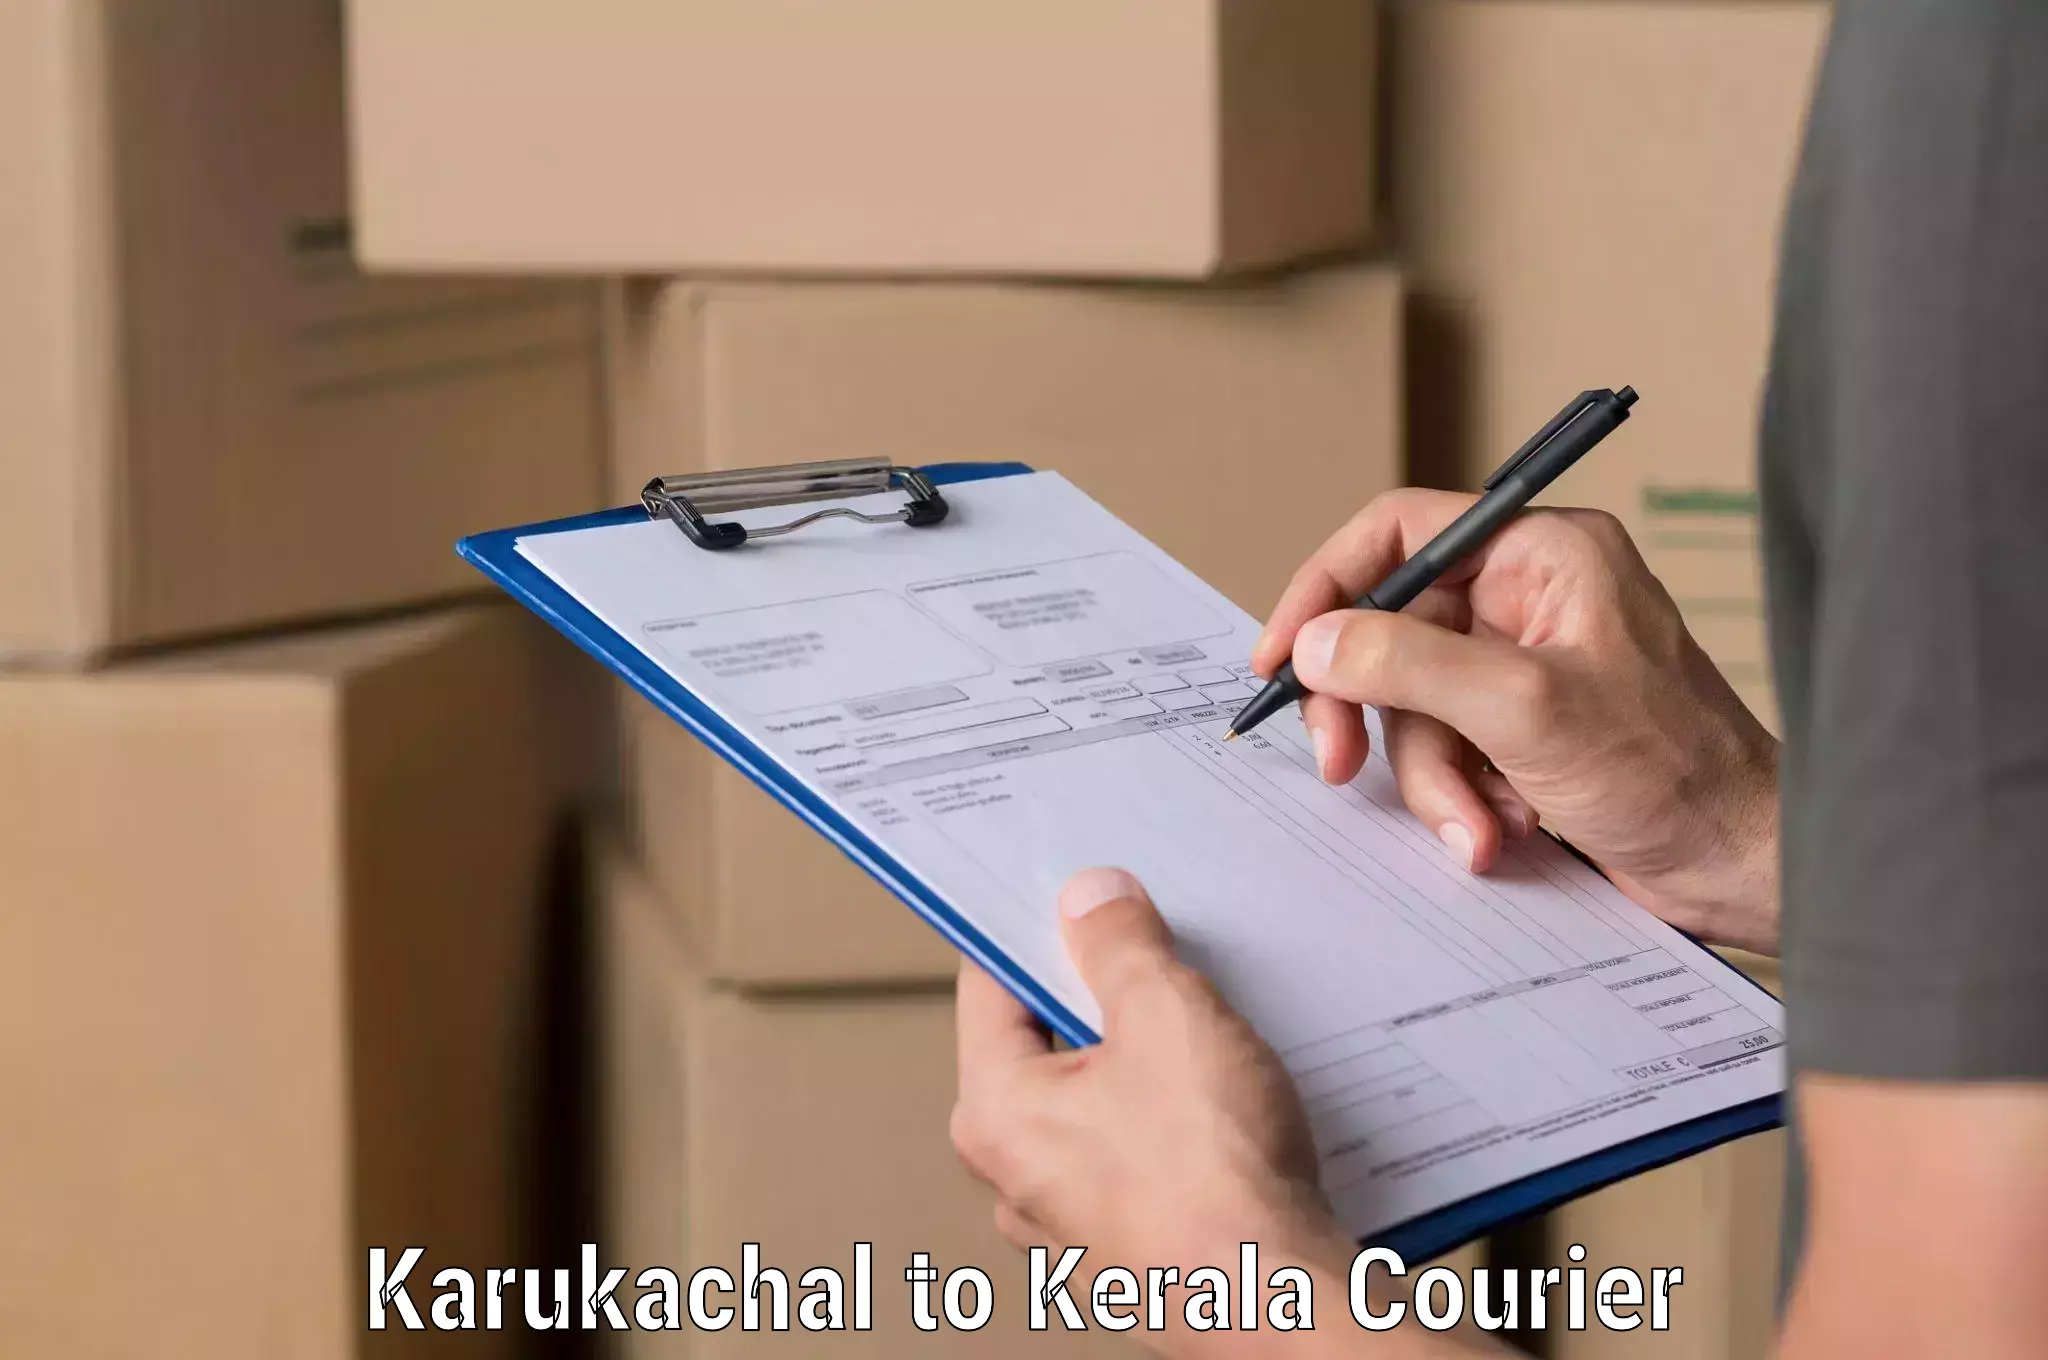 Modern delivery technologies Karukachal to Kerala